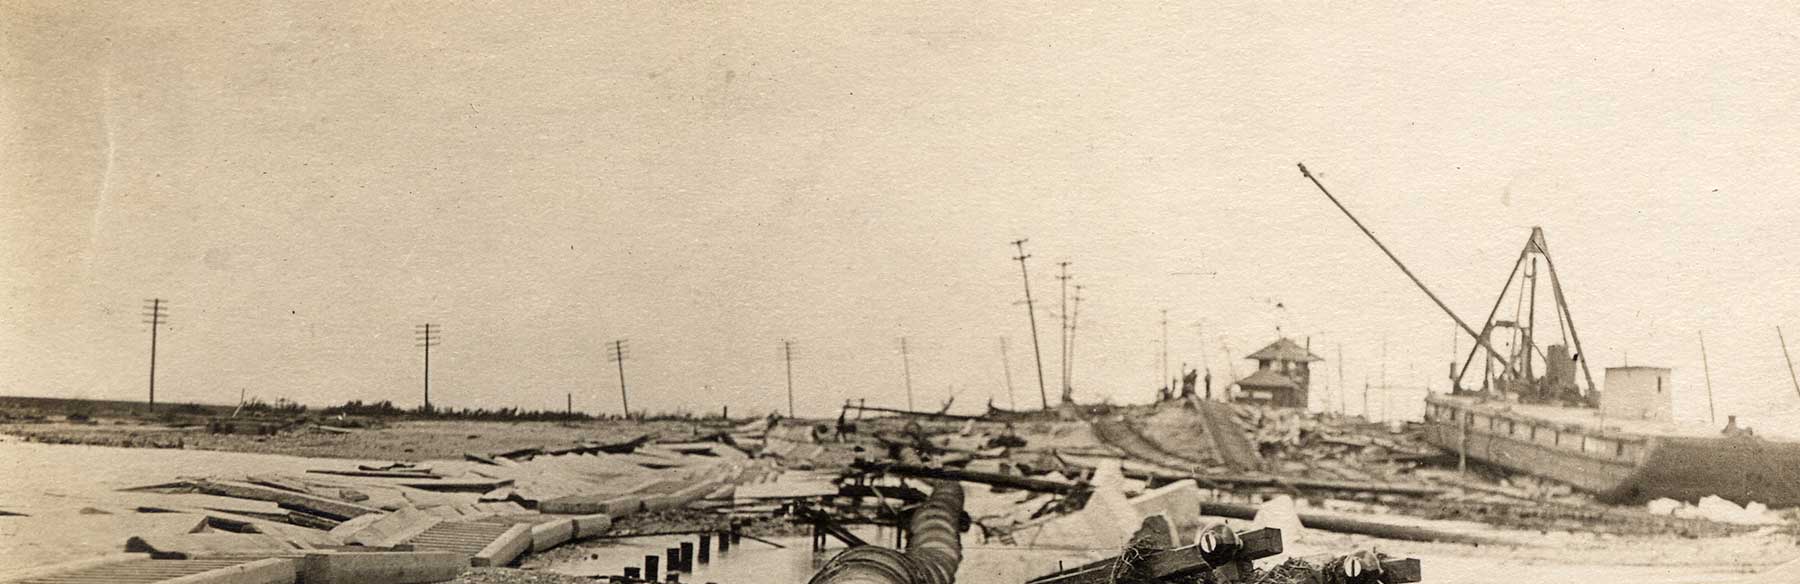 Historial photo of Galveston 1915 hurricane damage